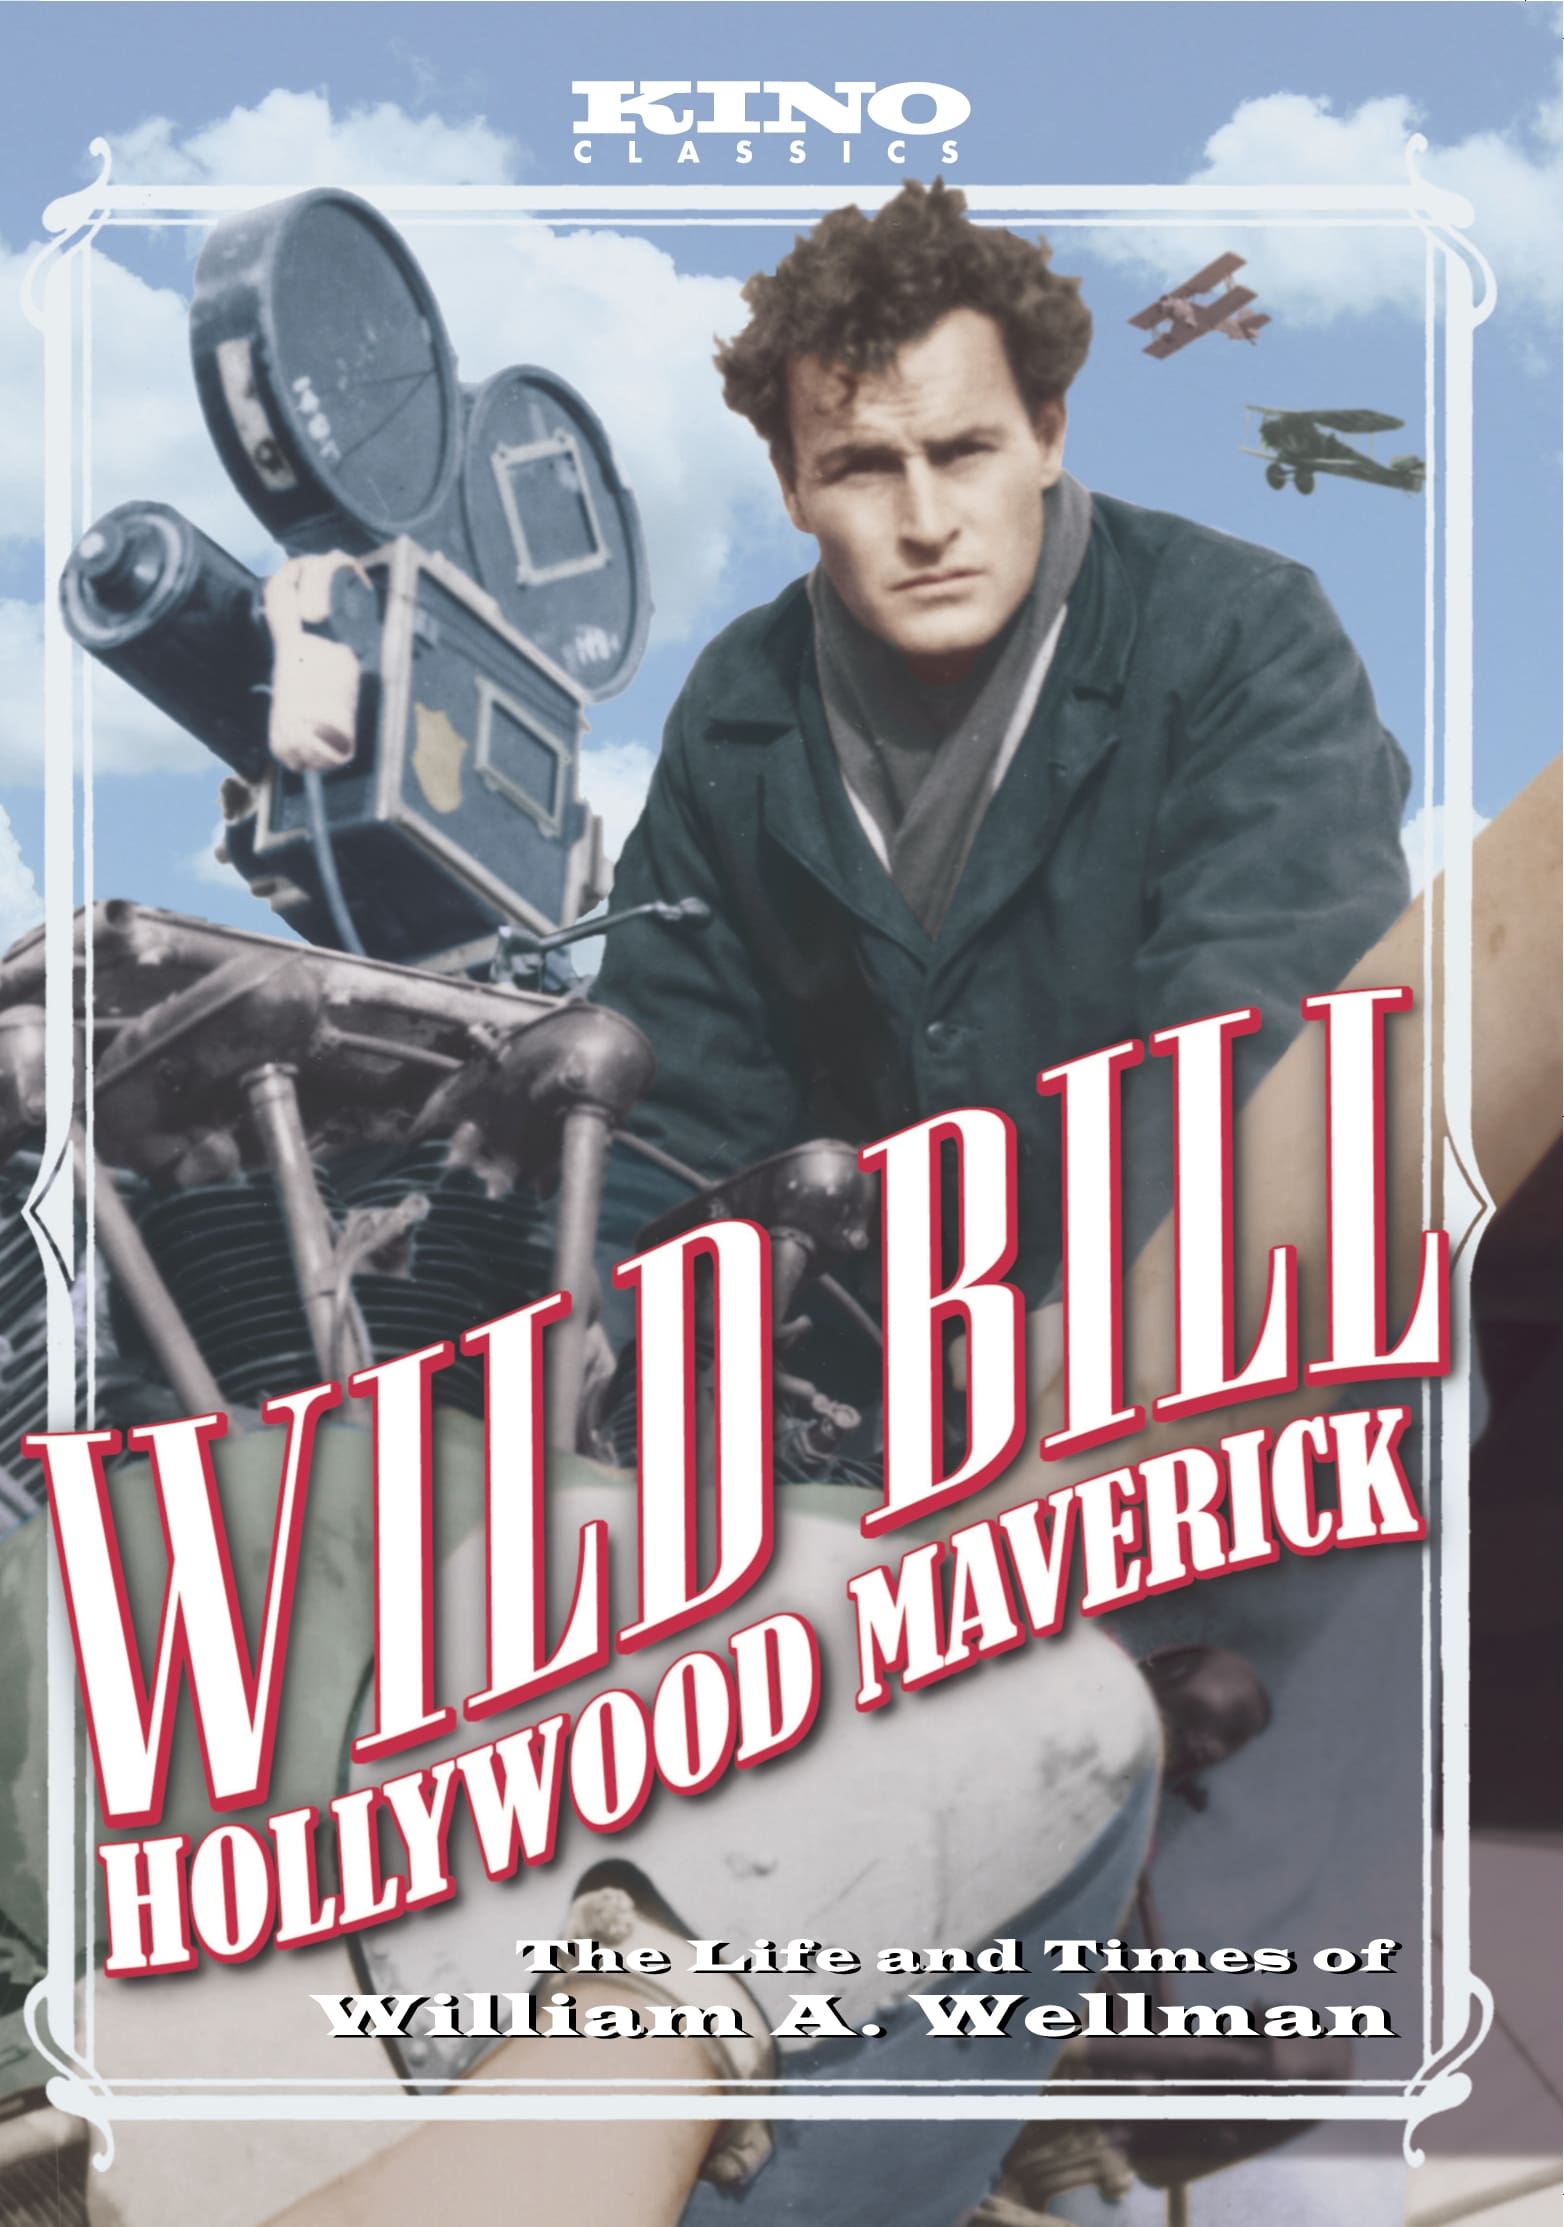 Wild Bill: Hollywood Maverick (1995)